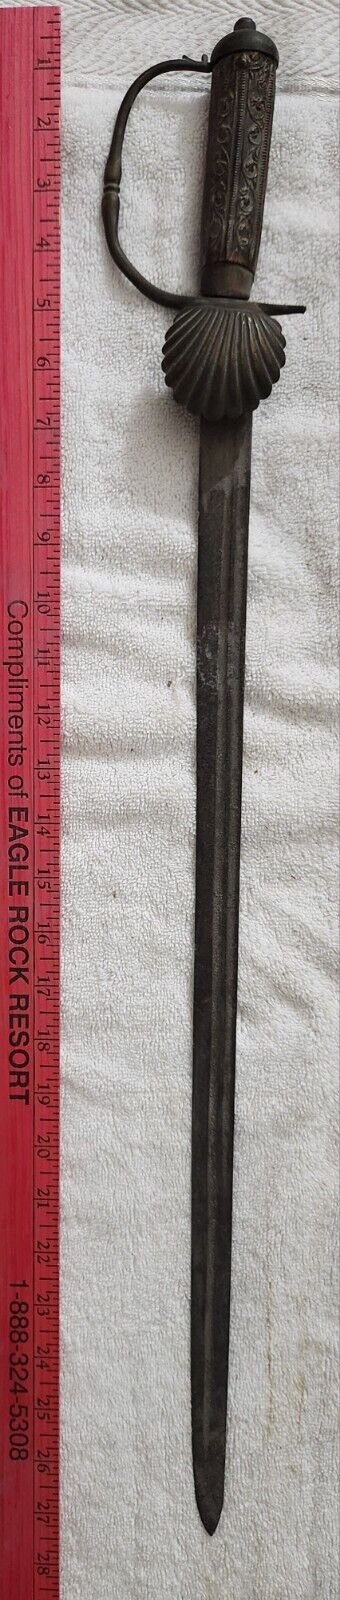 HANGER CUTTOE SHORT SWORD REVOLUTIONARY WAR 1700s 18th Century Clamshell Clam